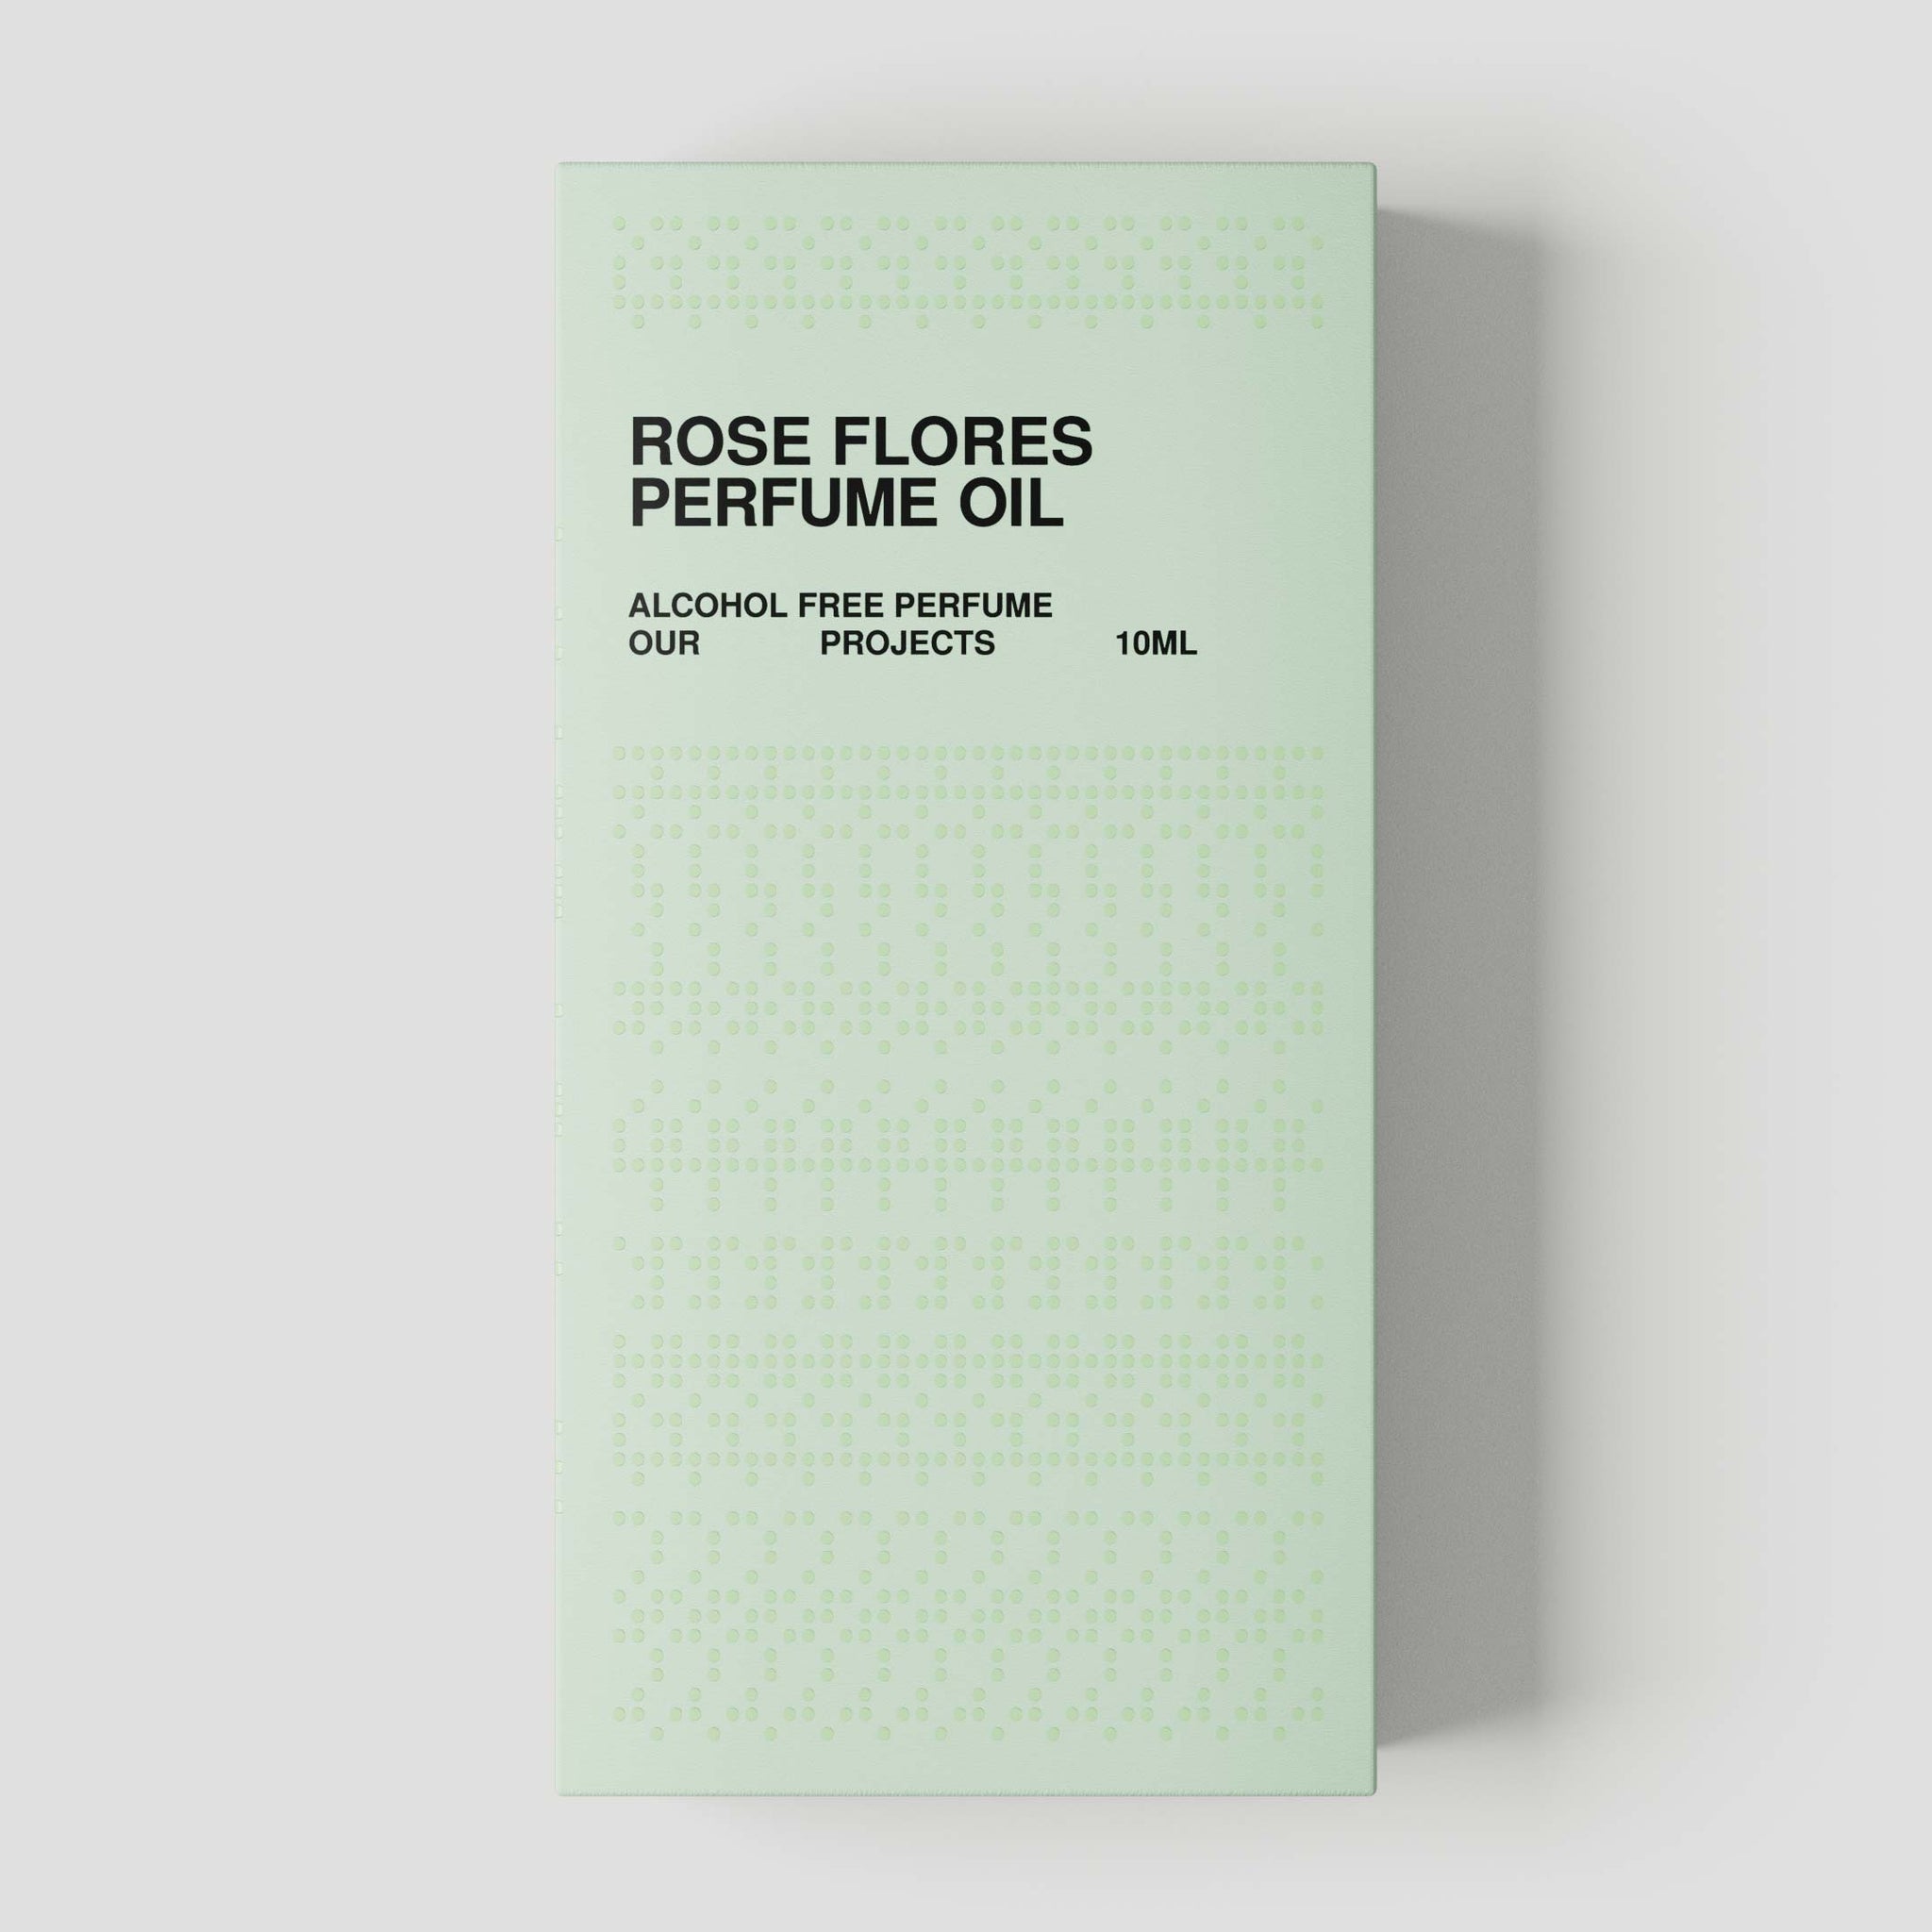 Rose Flores Perfume Oil